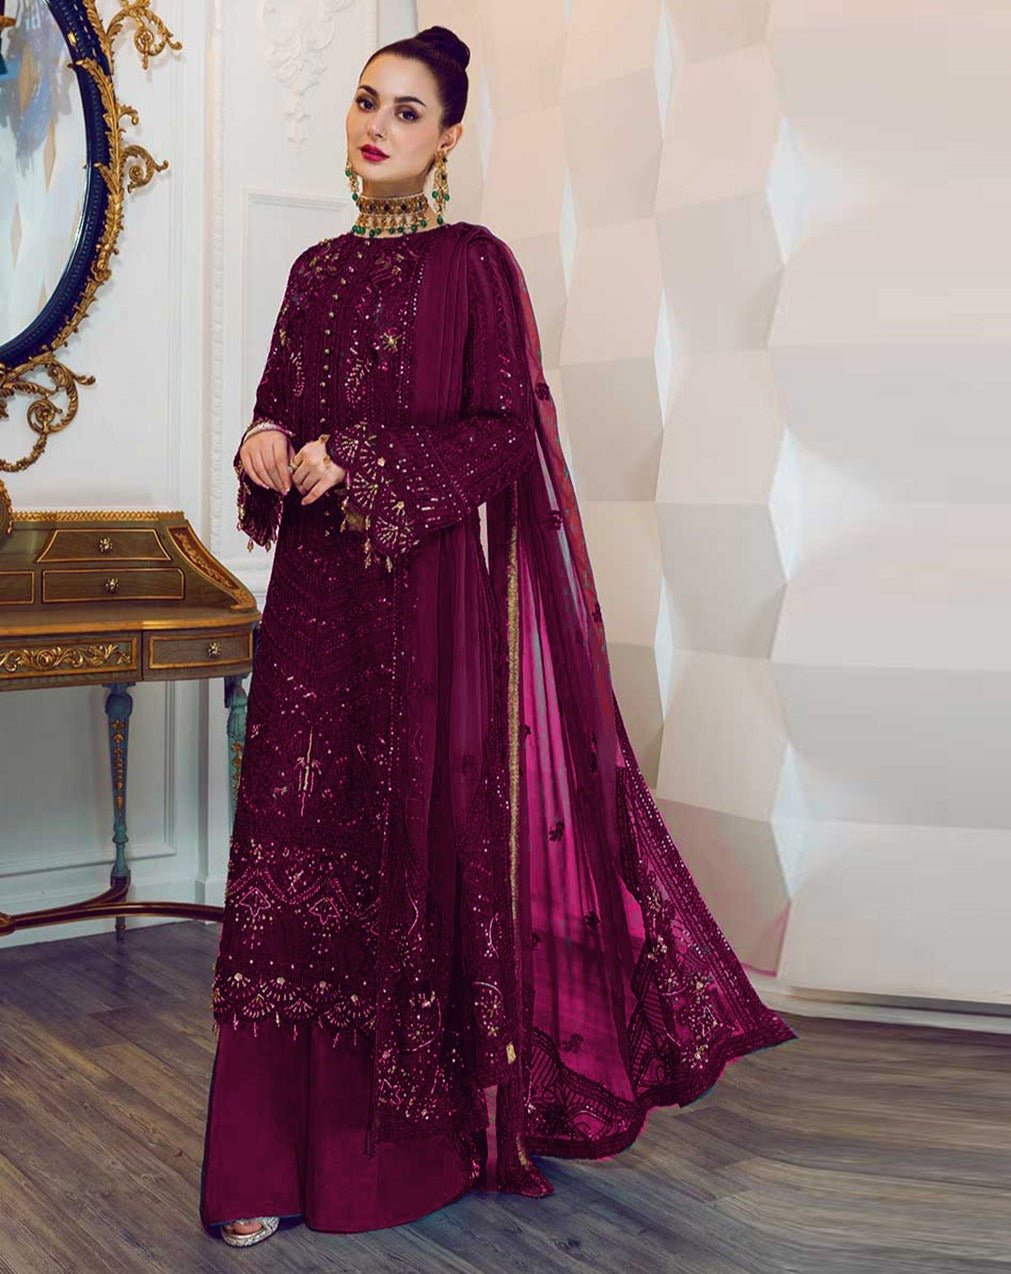 Trending purpale Color Designer Salwar suit Buy Now